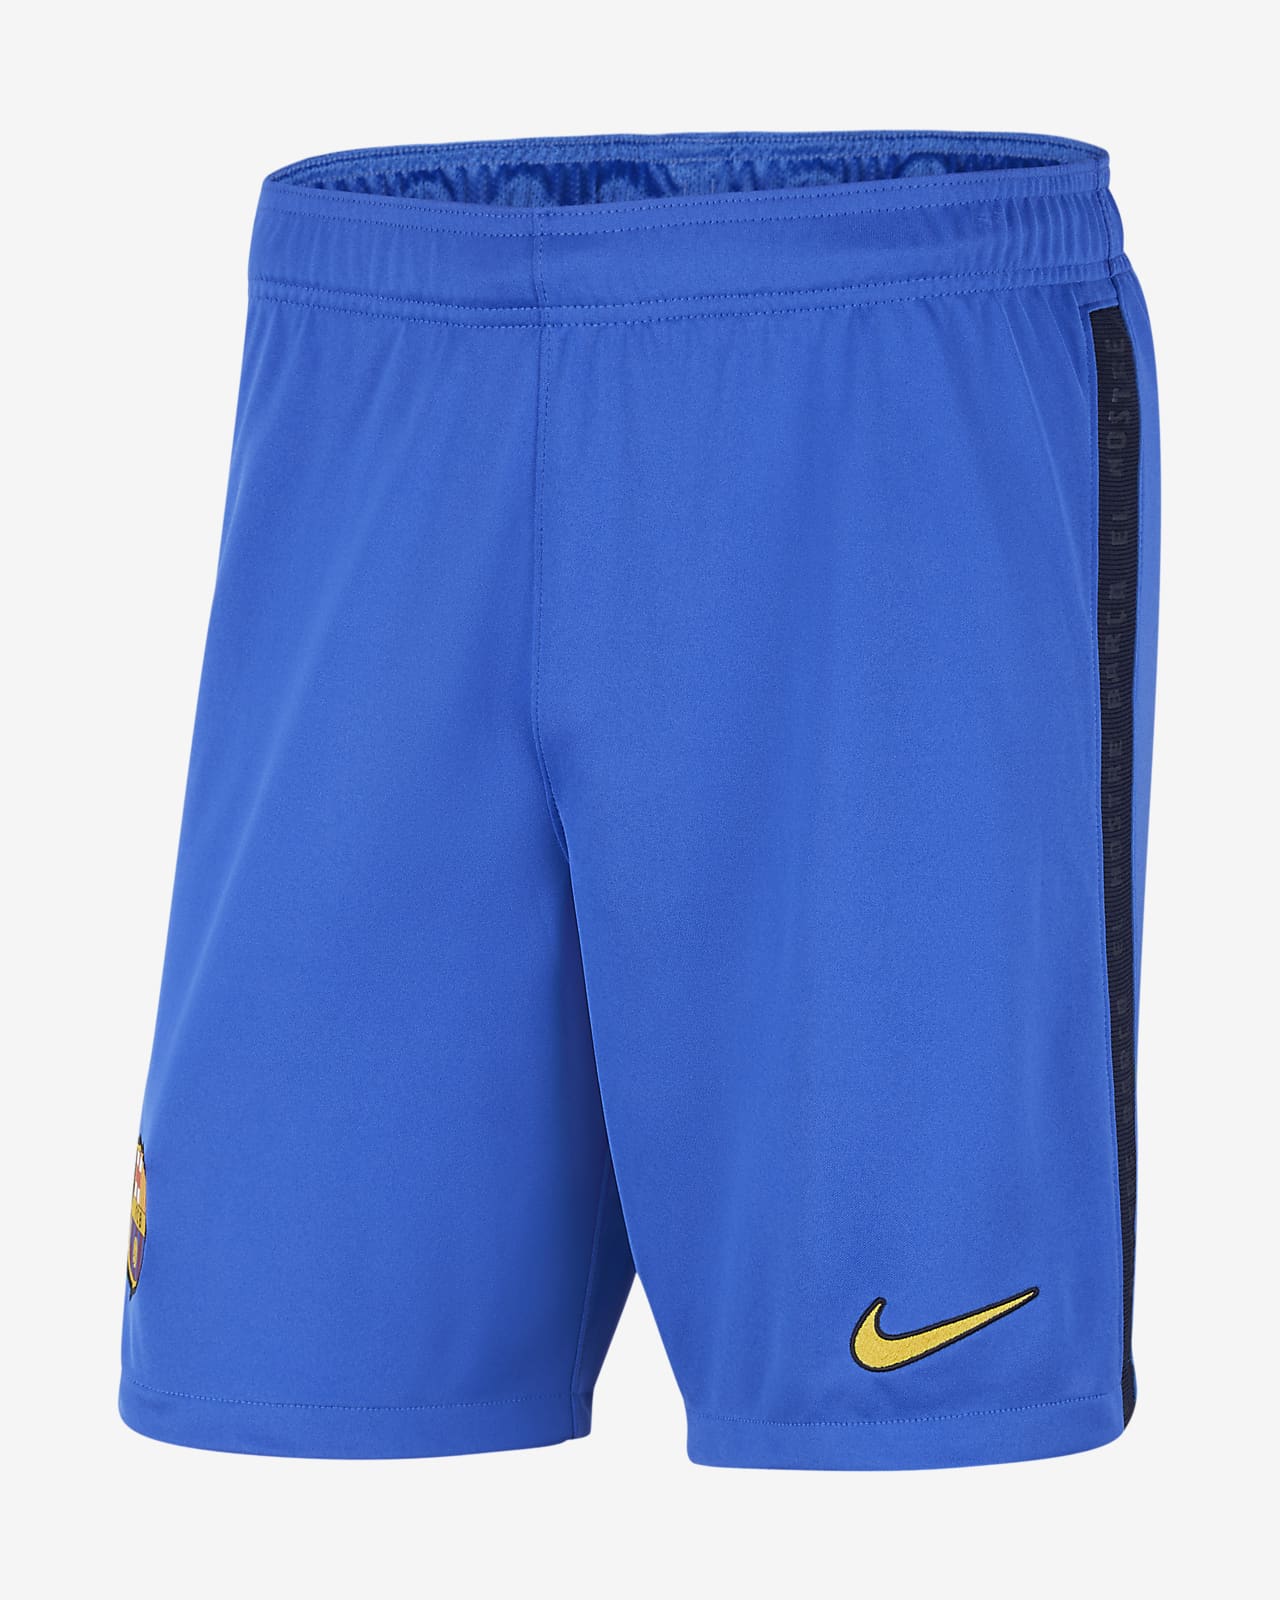 FC Barcelona 2021/22 Stadium Third Men's Nike Soccer Shorts. .com